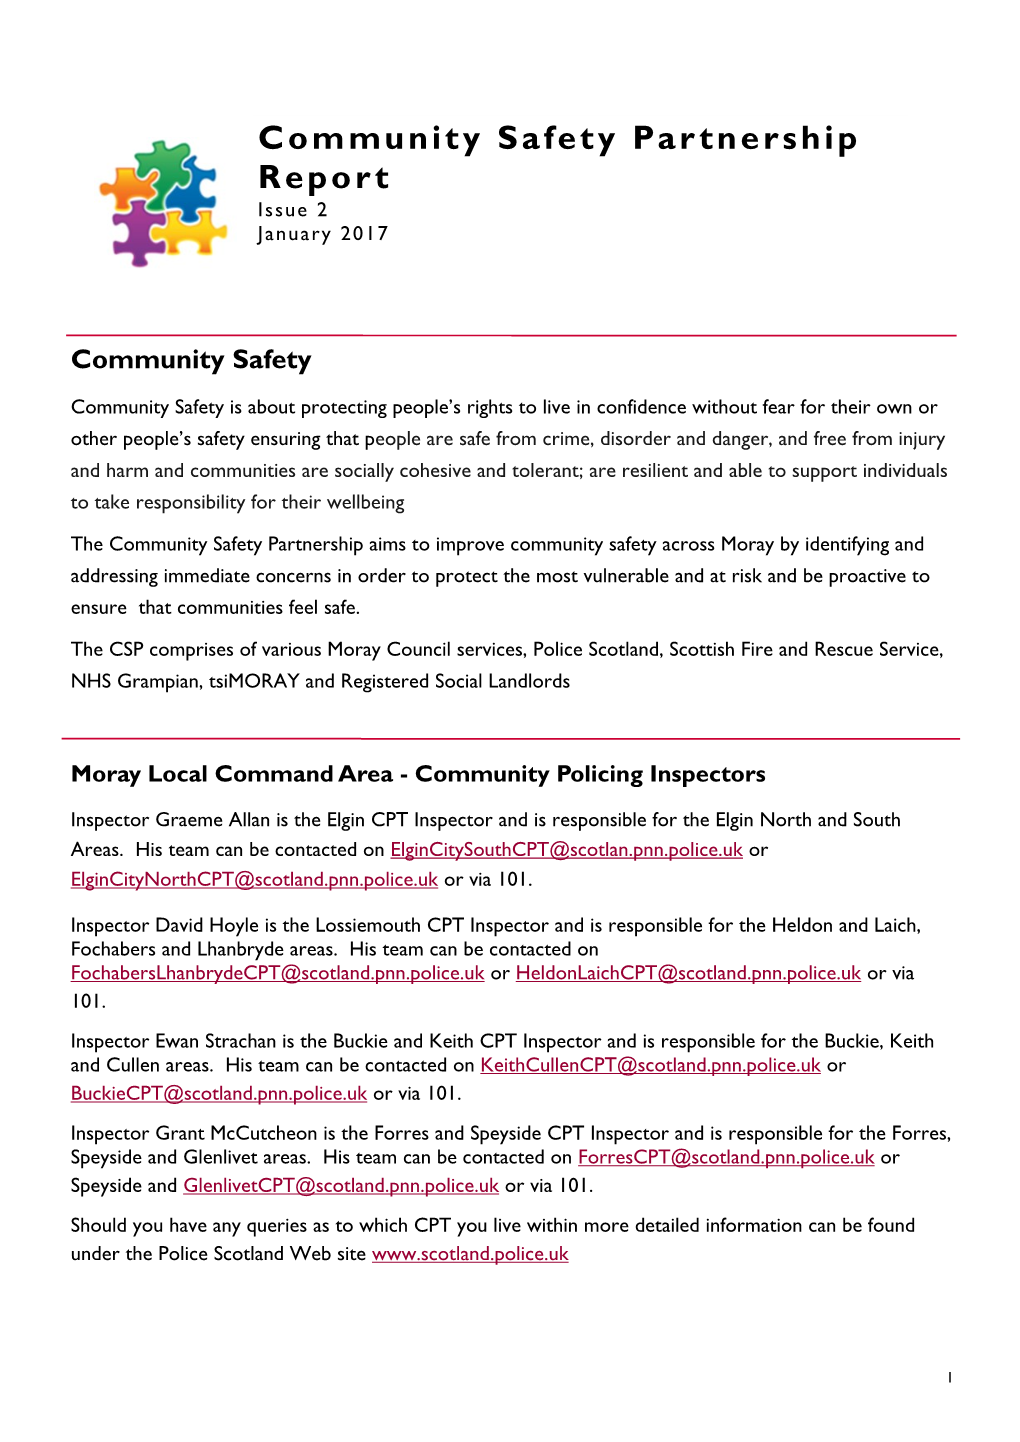 Community Safety Partnership Report